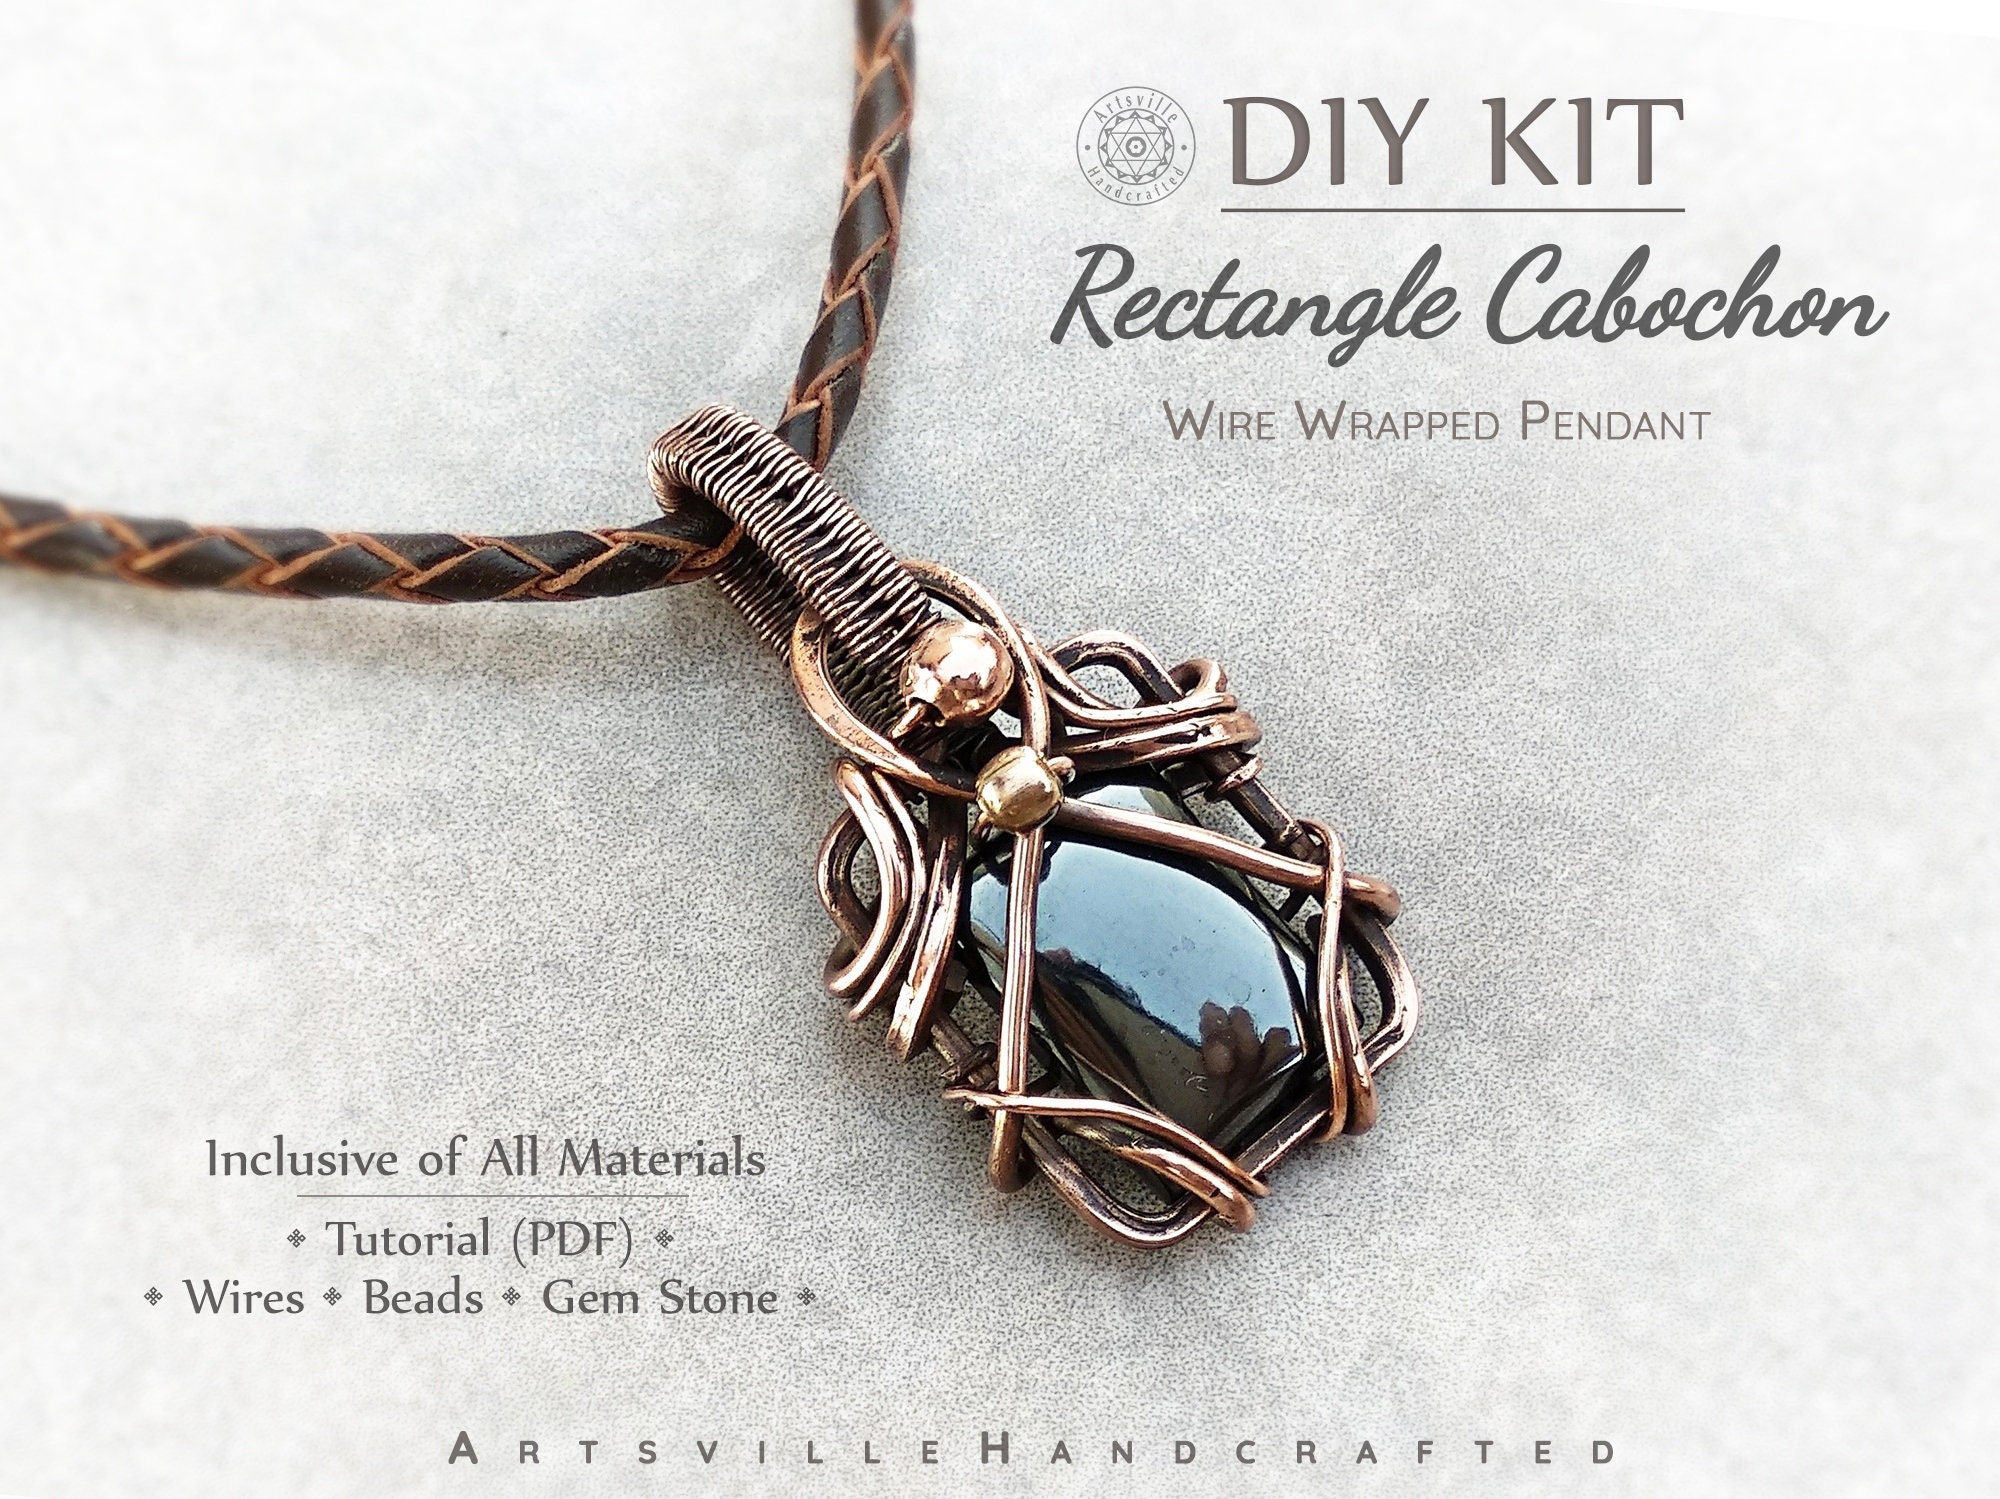 Full DIY Kit, Wire Wrapping Kit, Jewelry Making Kit, Craft Kits